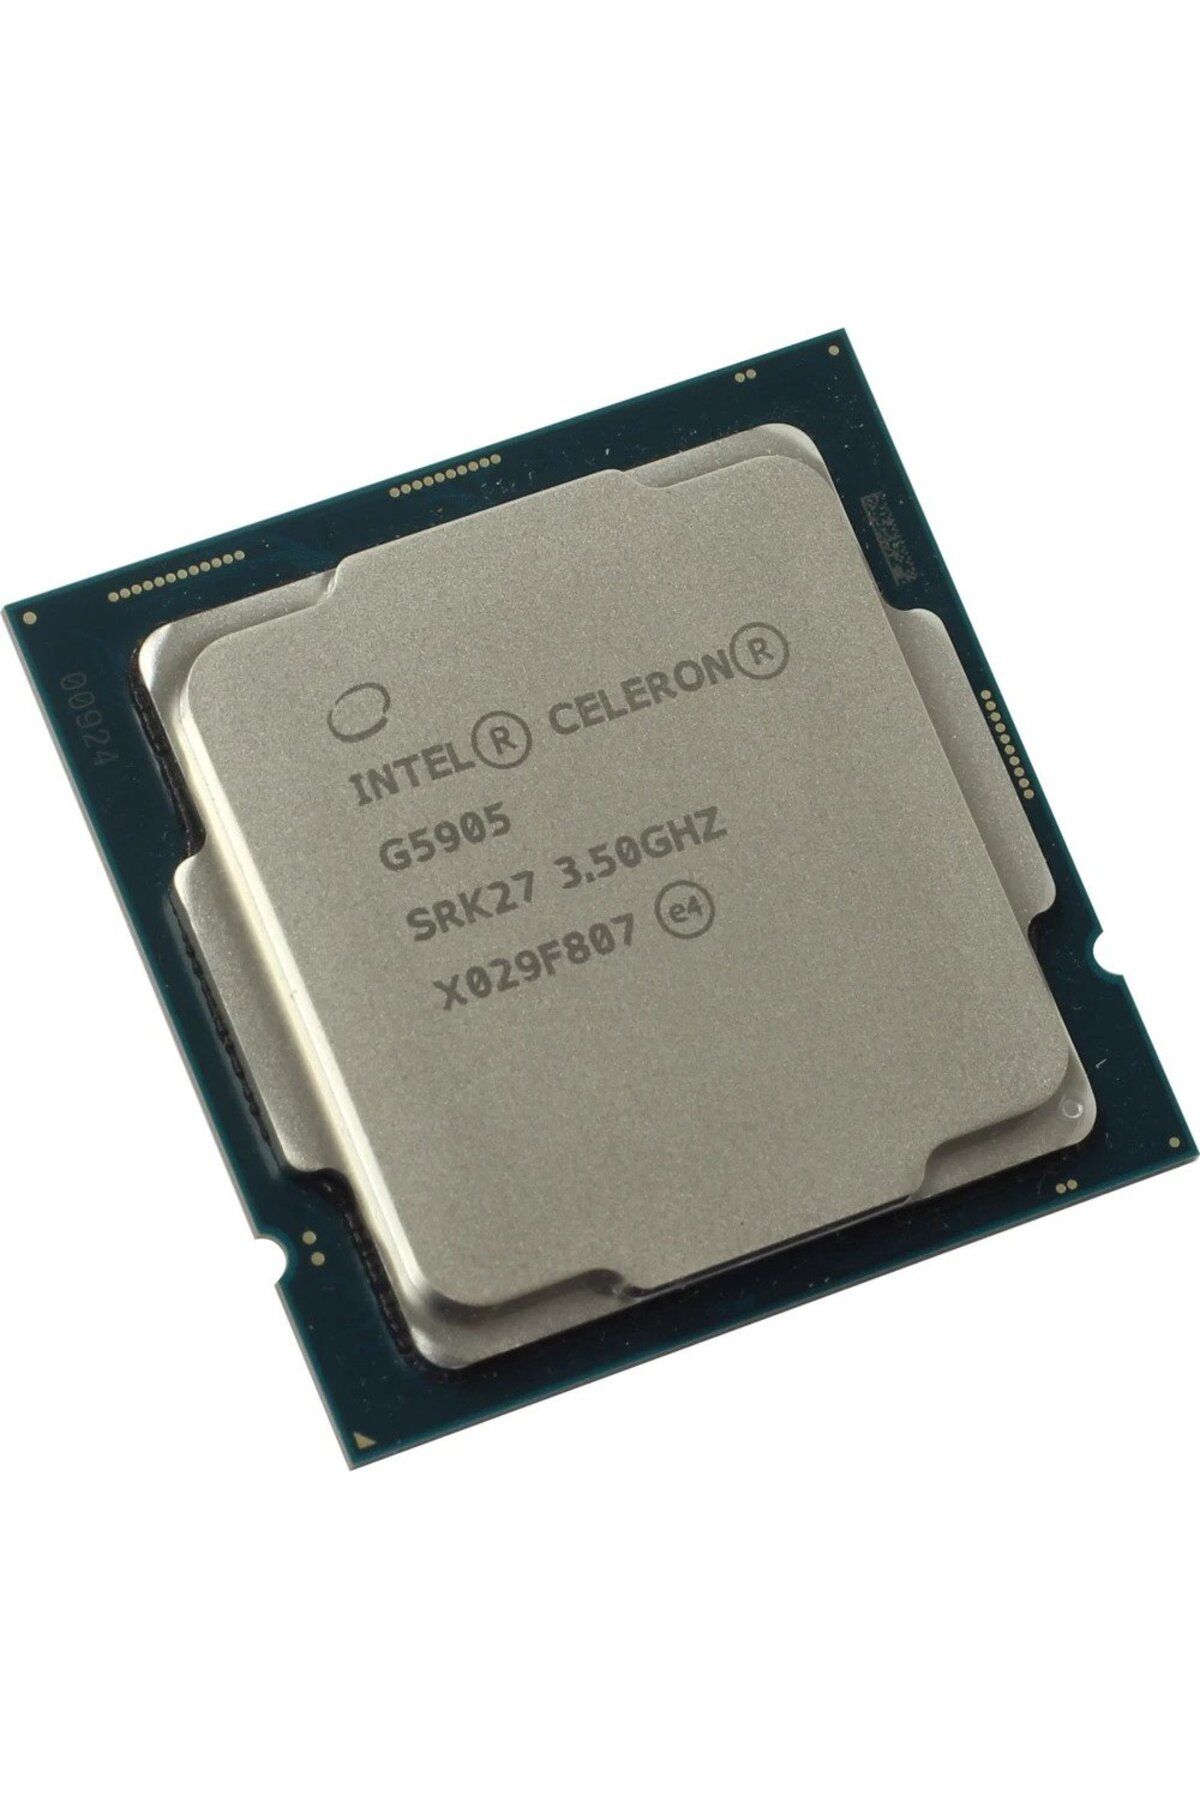 Intel COMETLAKE G5905 3.5GHZ 4MB 1200Pin IŞLEMCI TRAY